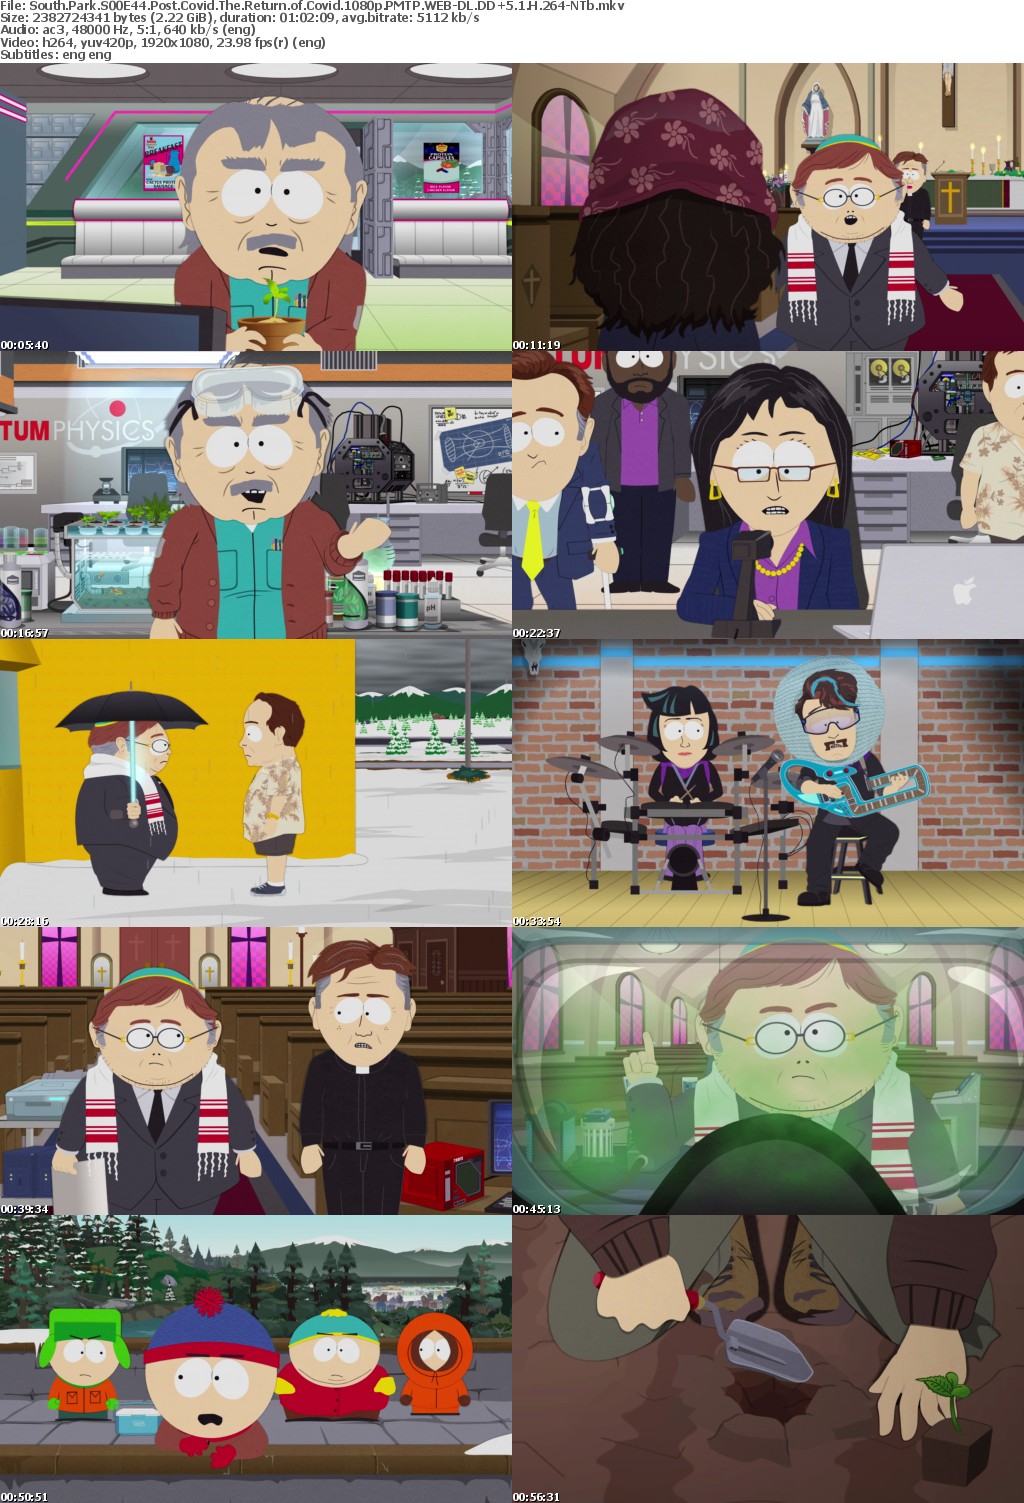 South Park S00E44 Post Covid The Return of Covid 1080p PMTP WEBRip DDP5 1 x264-NTb